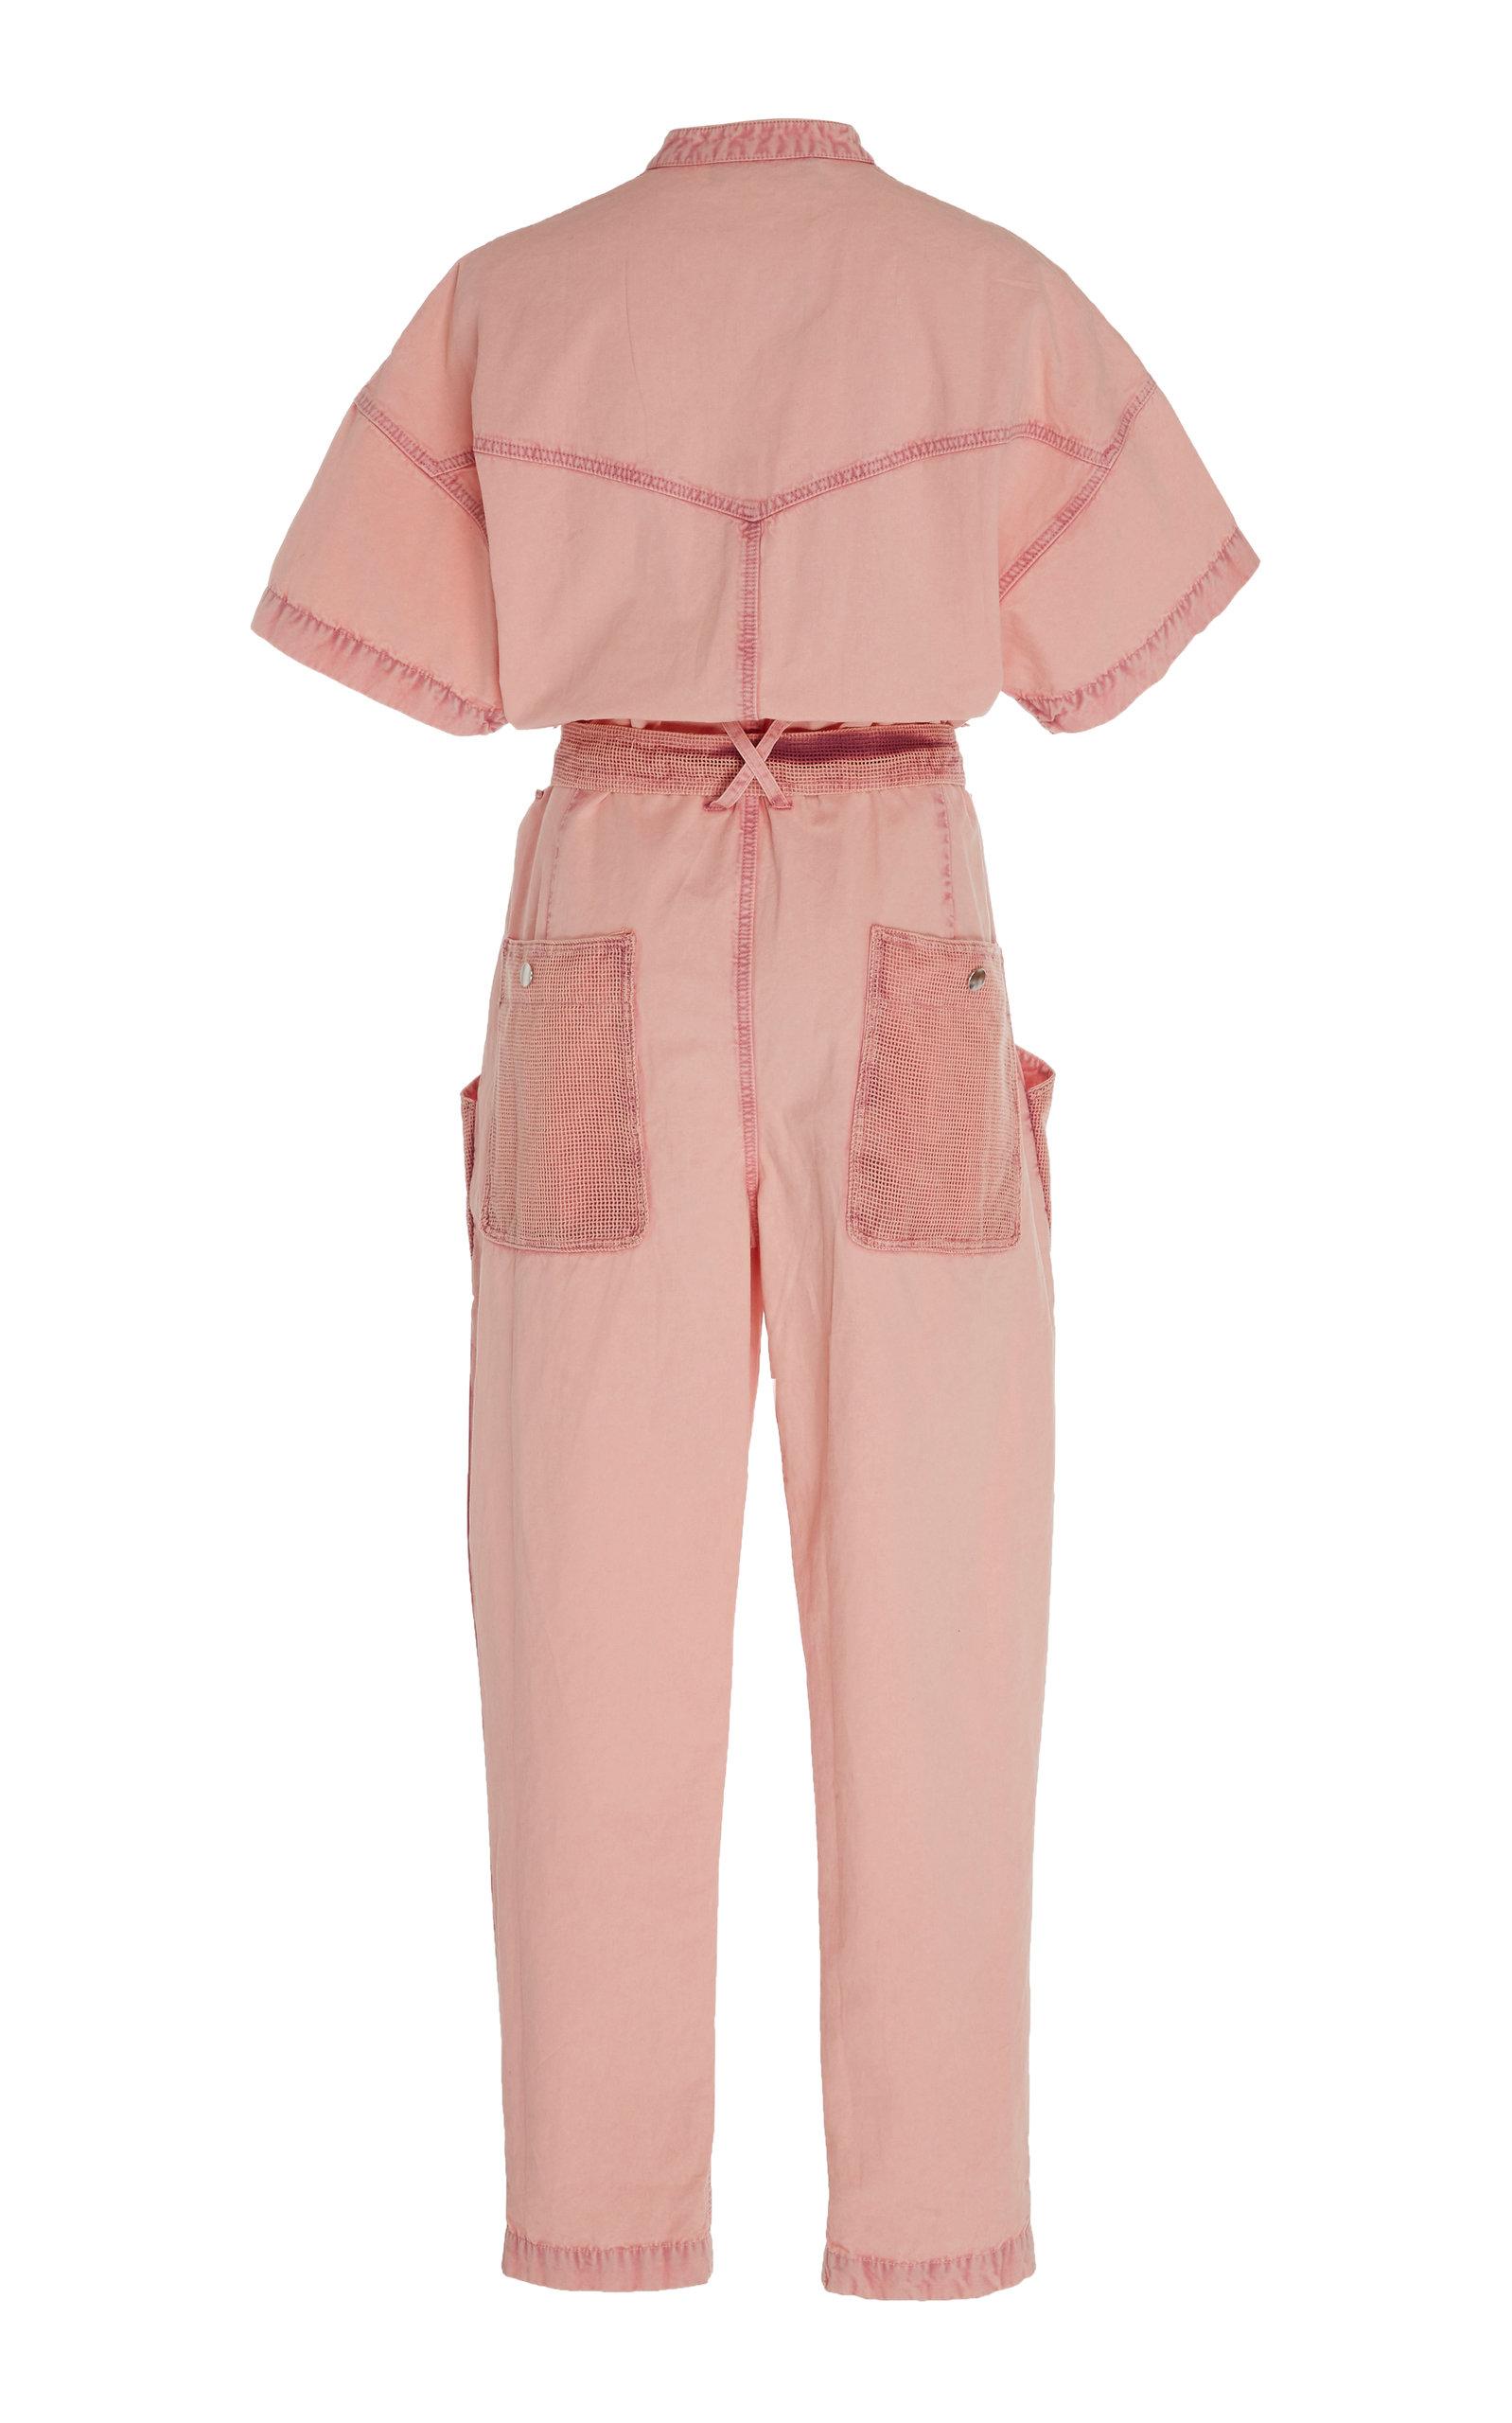 Isabel Marant Denim Tundra Jumpsuit in Light (Pink) - Lyst